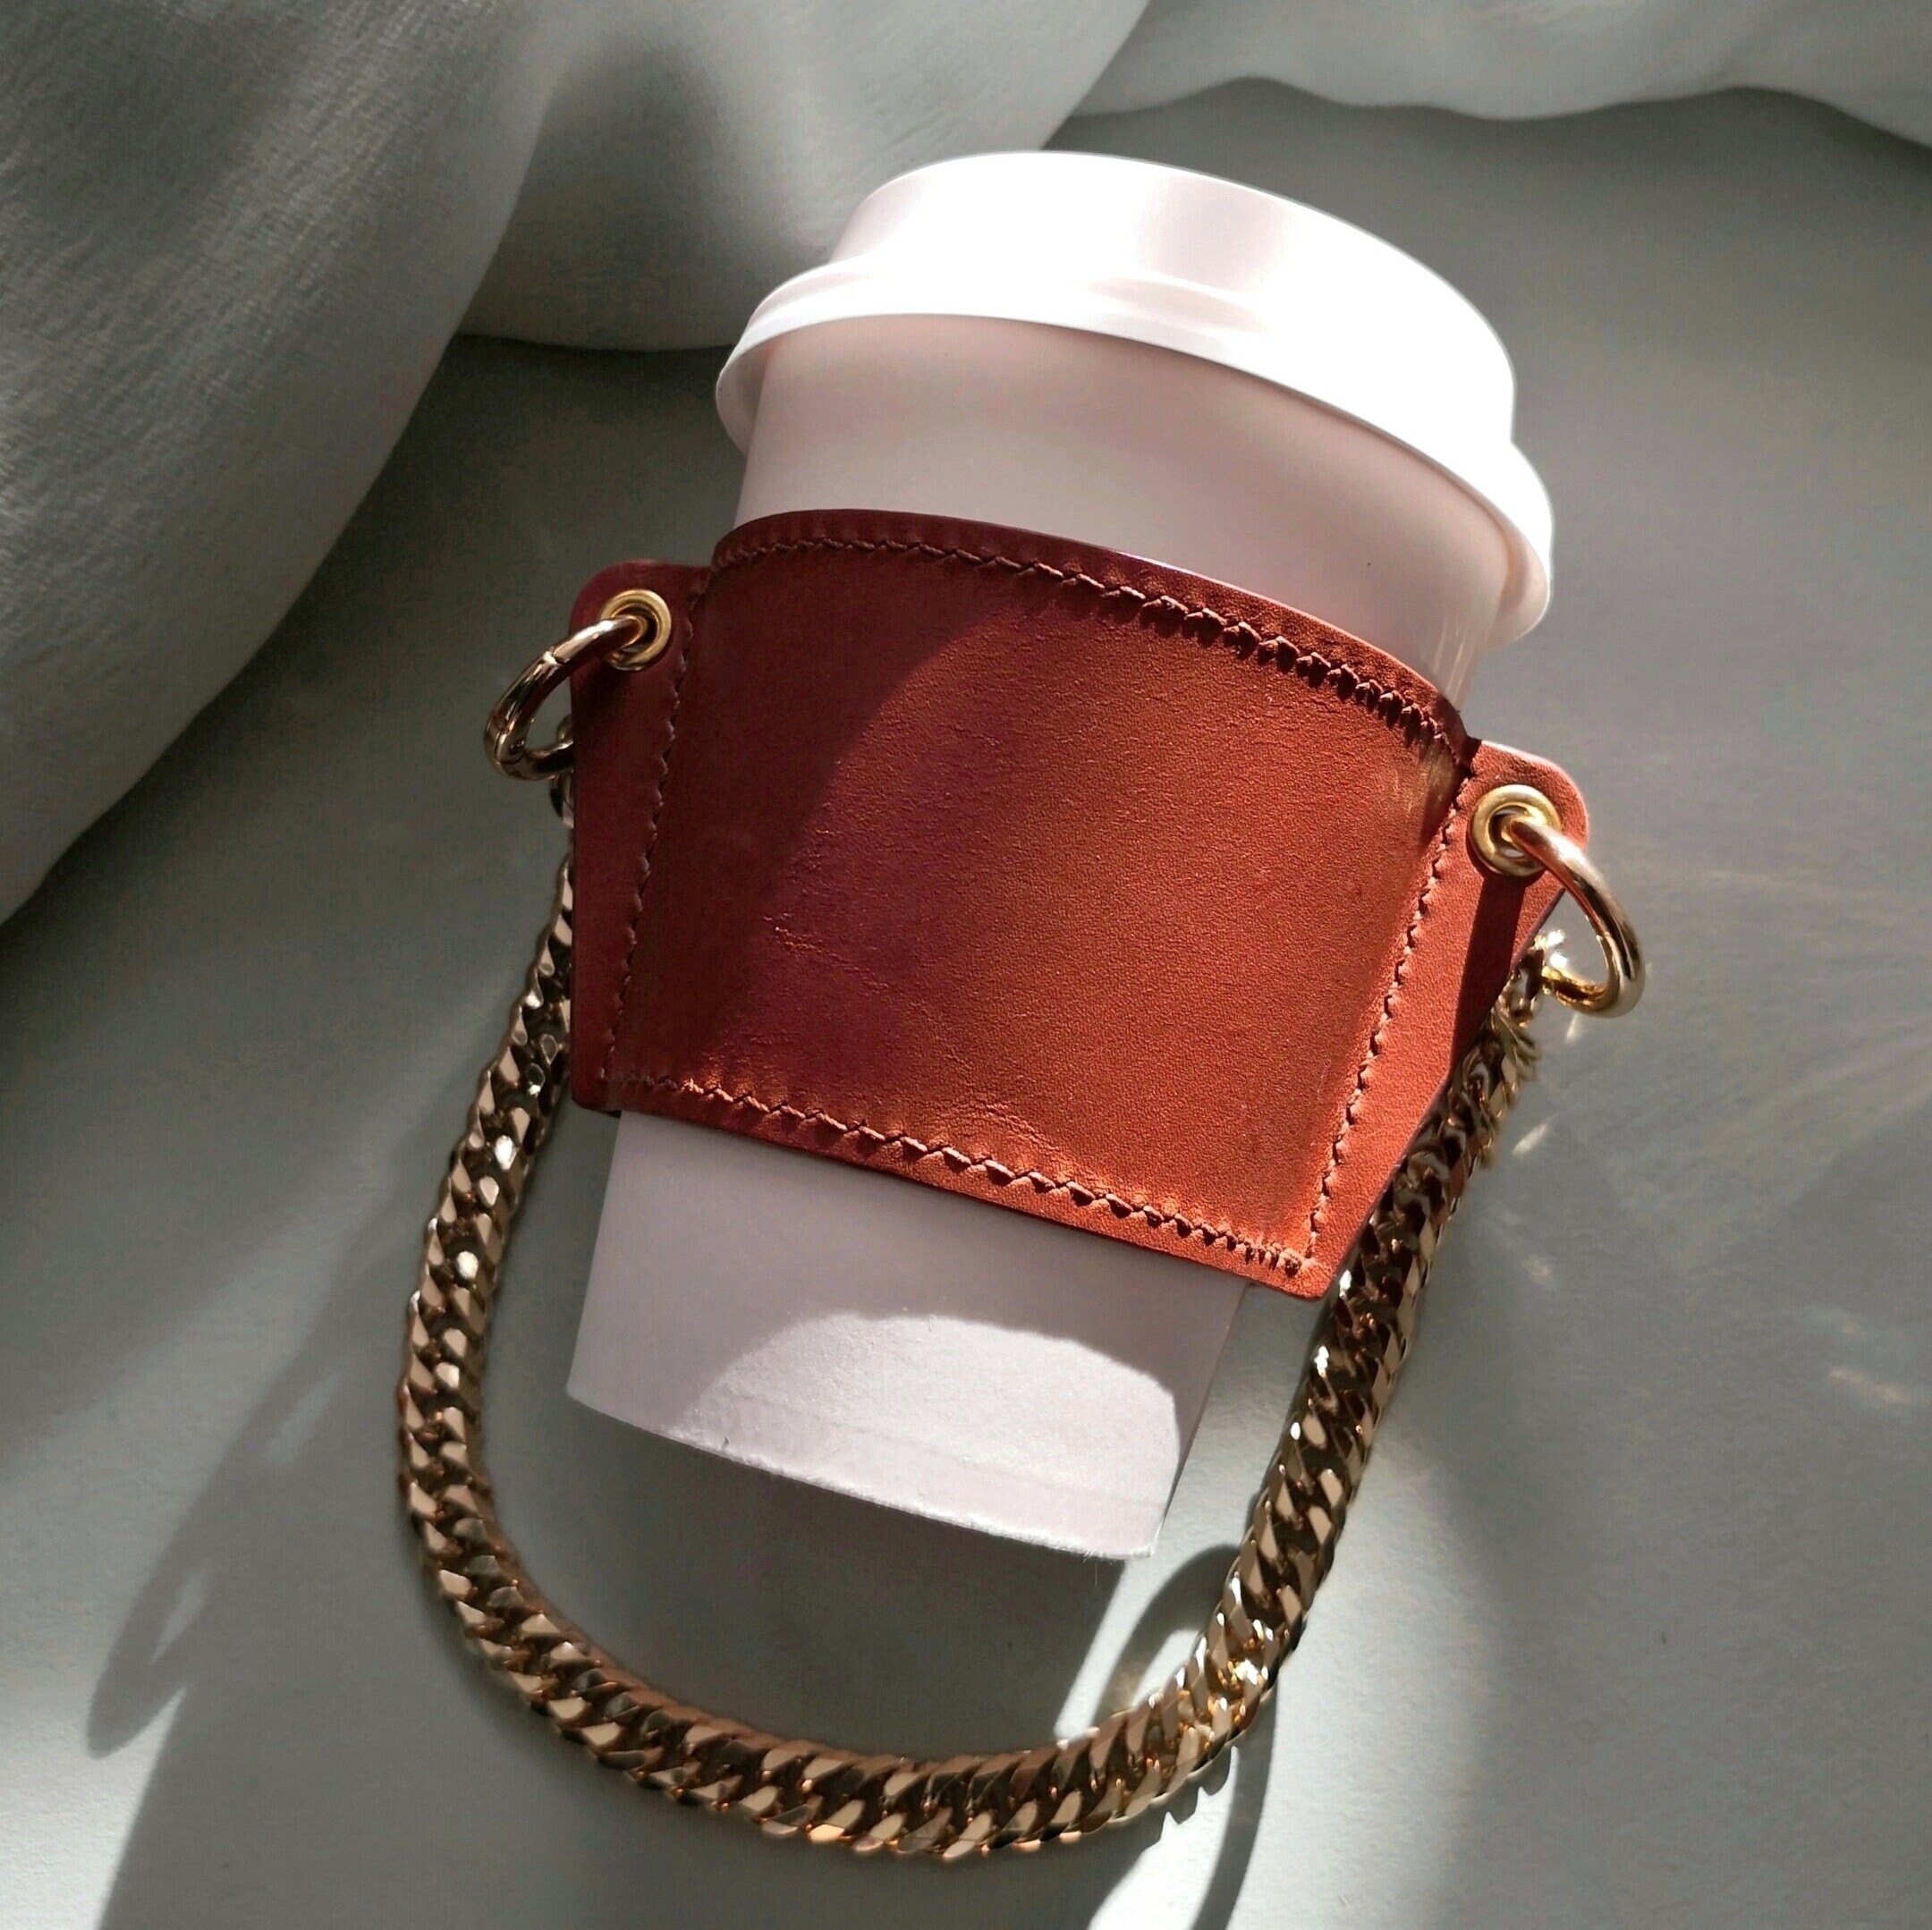 Luxury Leather Drinks Handled Sleeve Holder, Reusable Travel Coffee Cup Holder, Detachable Metal Chain Cup Holder, Portable Cup Holder Insulated